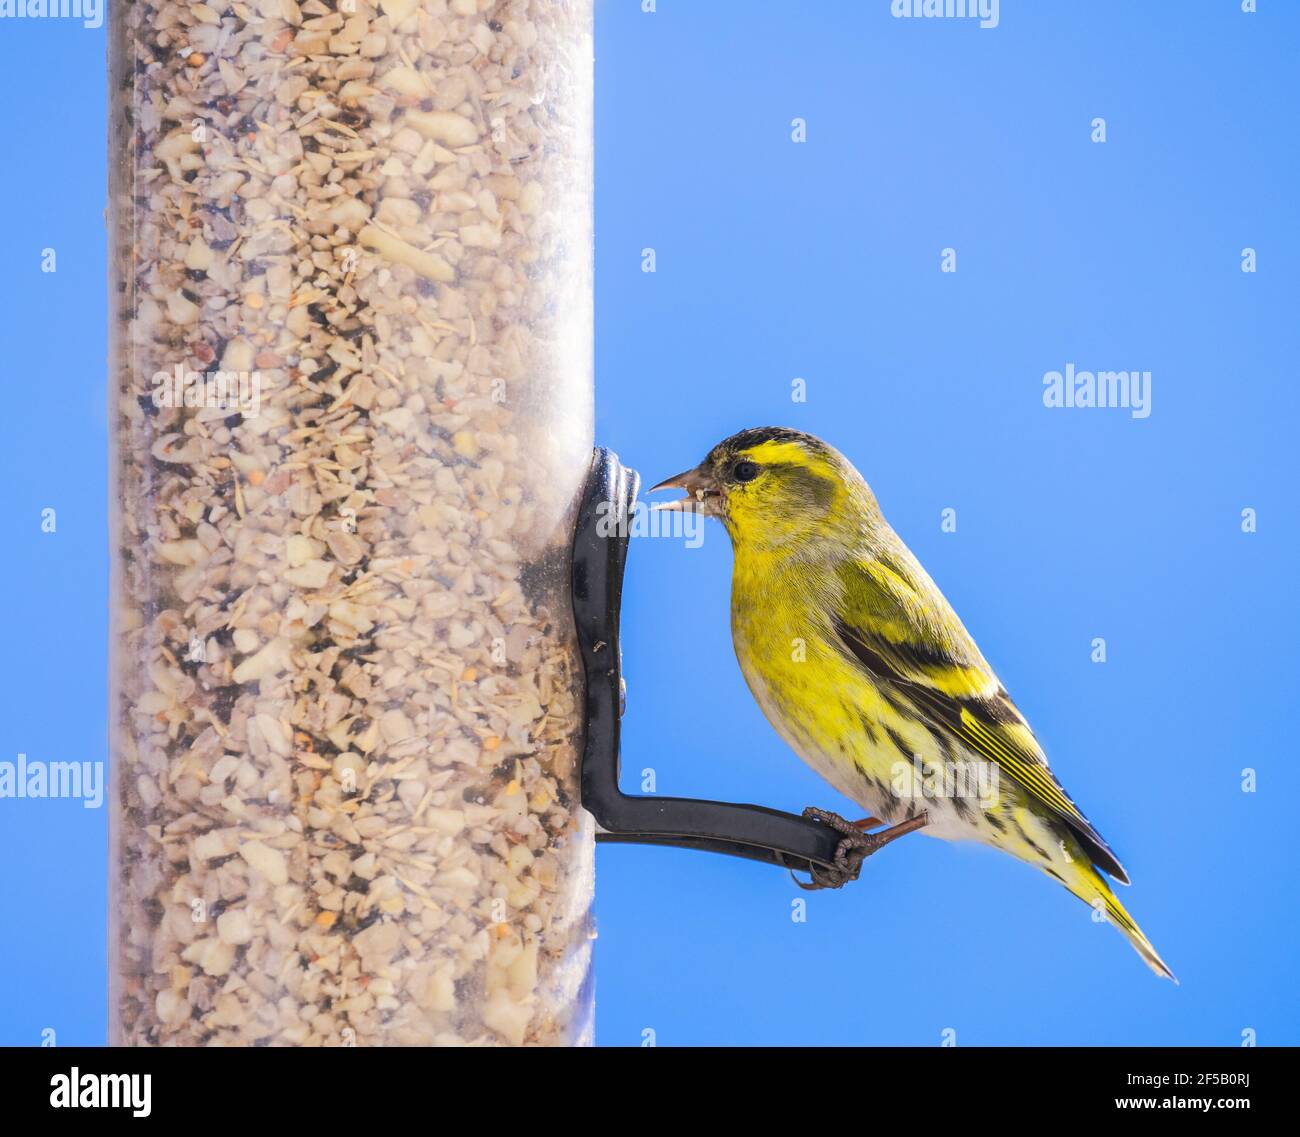 Closeup of a male siskin bird sitting on a bird feeder Stock Photo